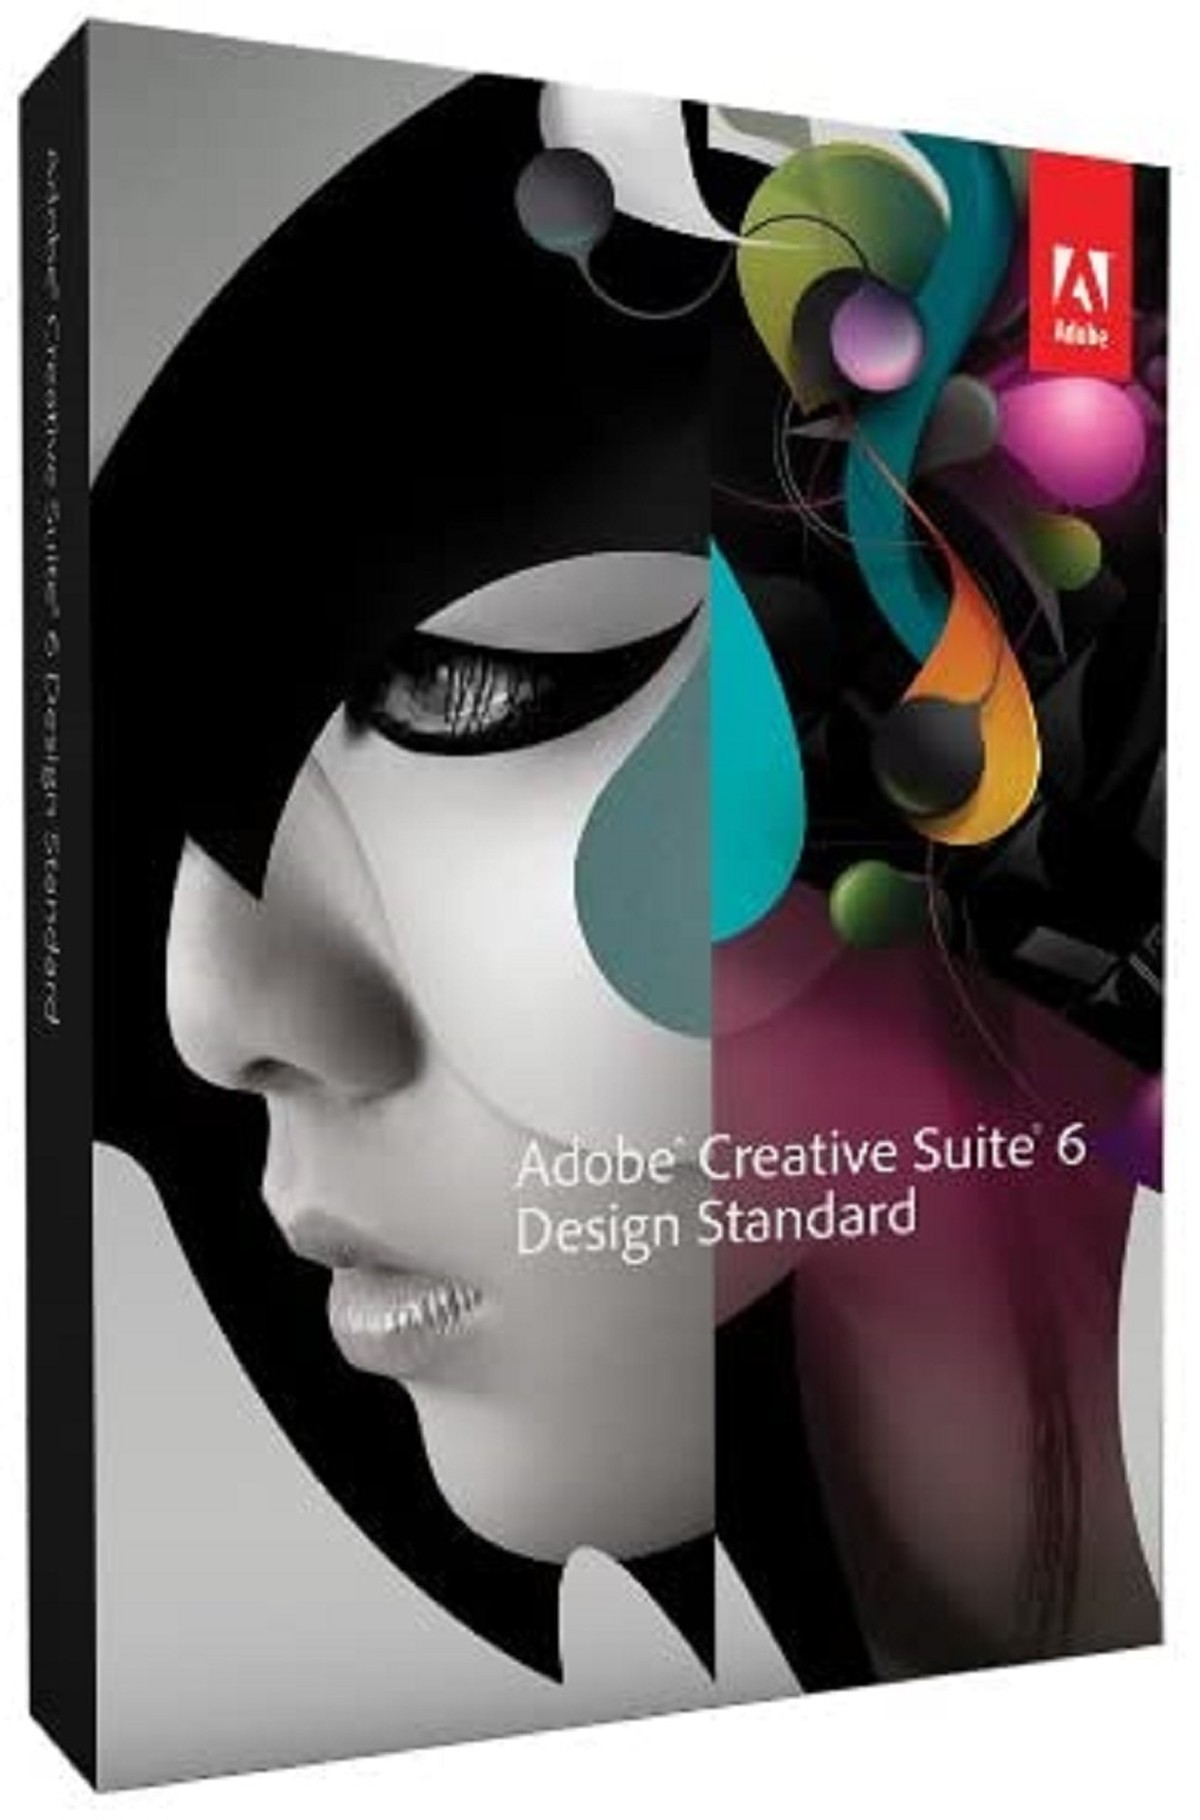 Adobe Design Standard Cs6 Mac 日本語 永久ライセンス パッケージ版 Adobe買取販売店 Calton 東京 板橋